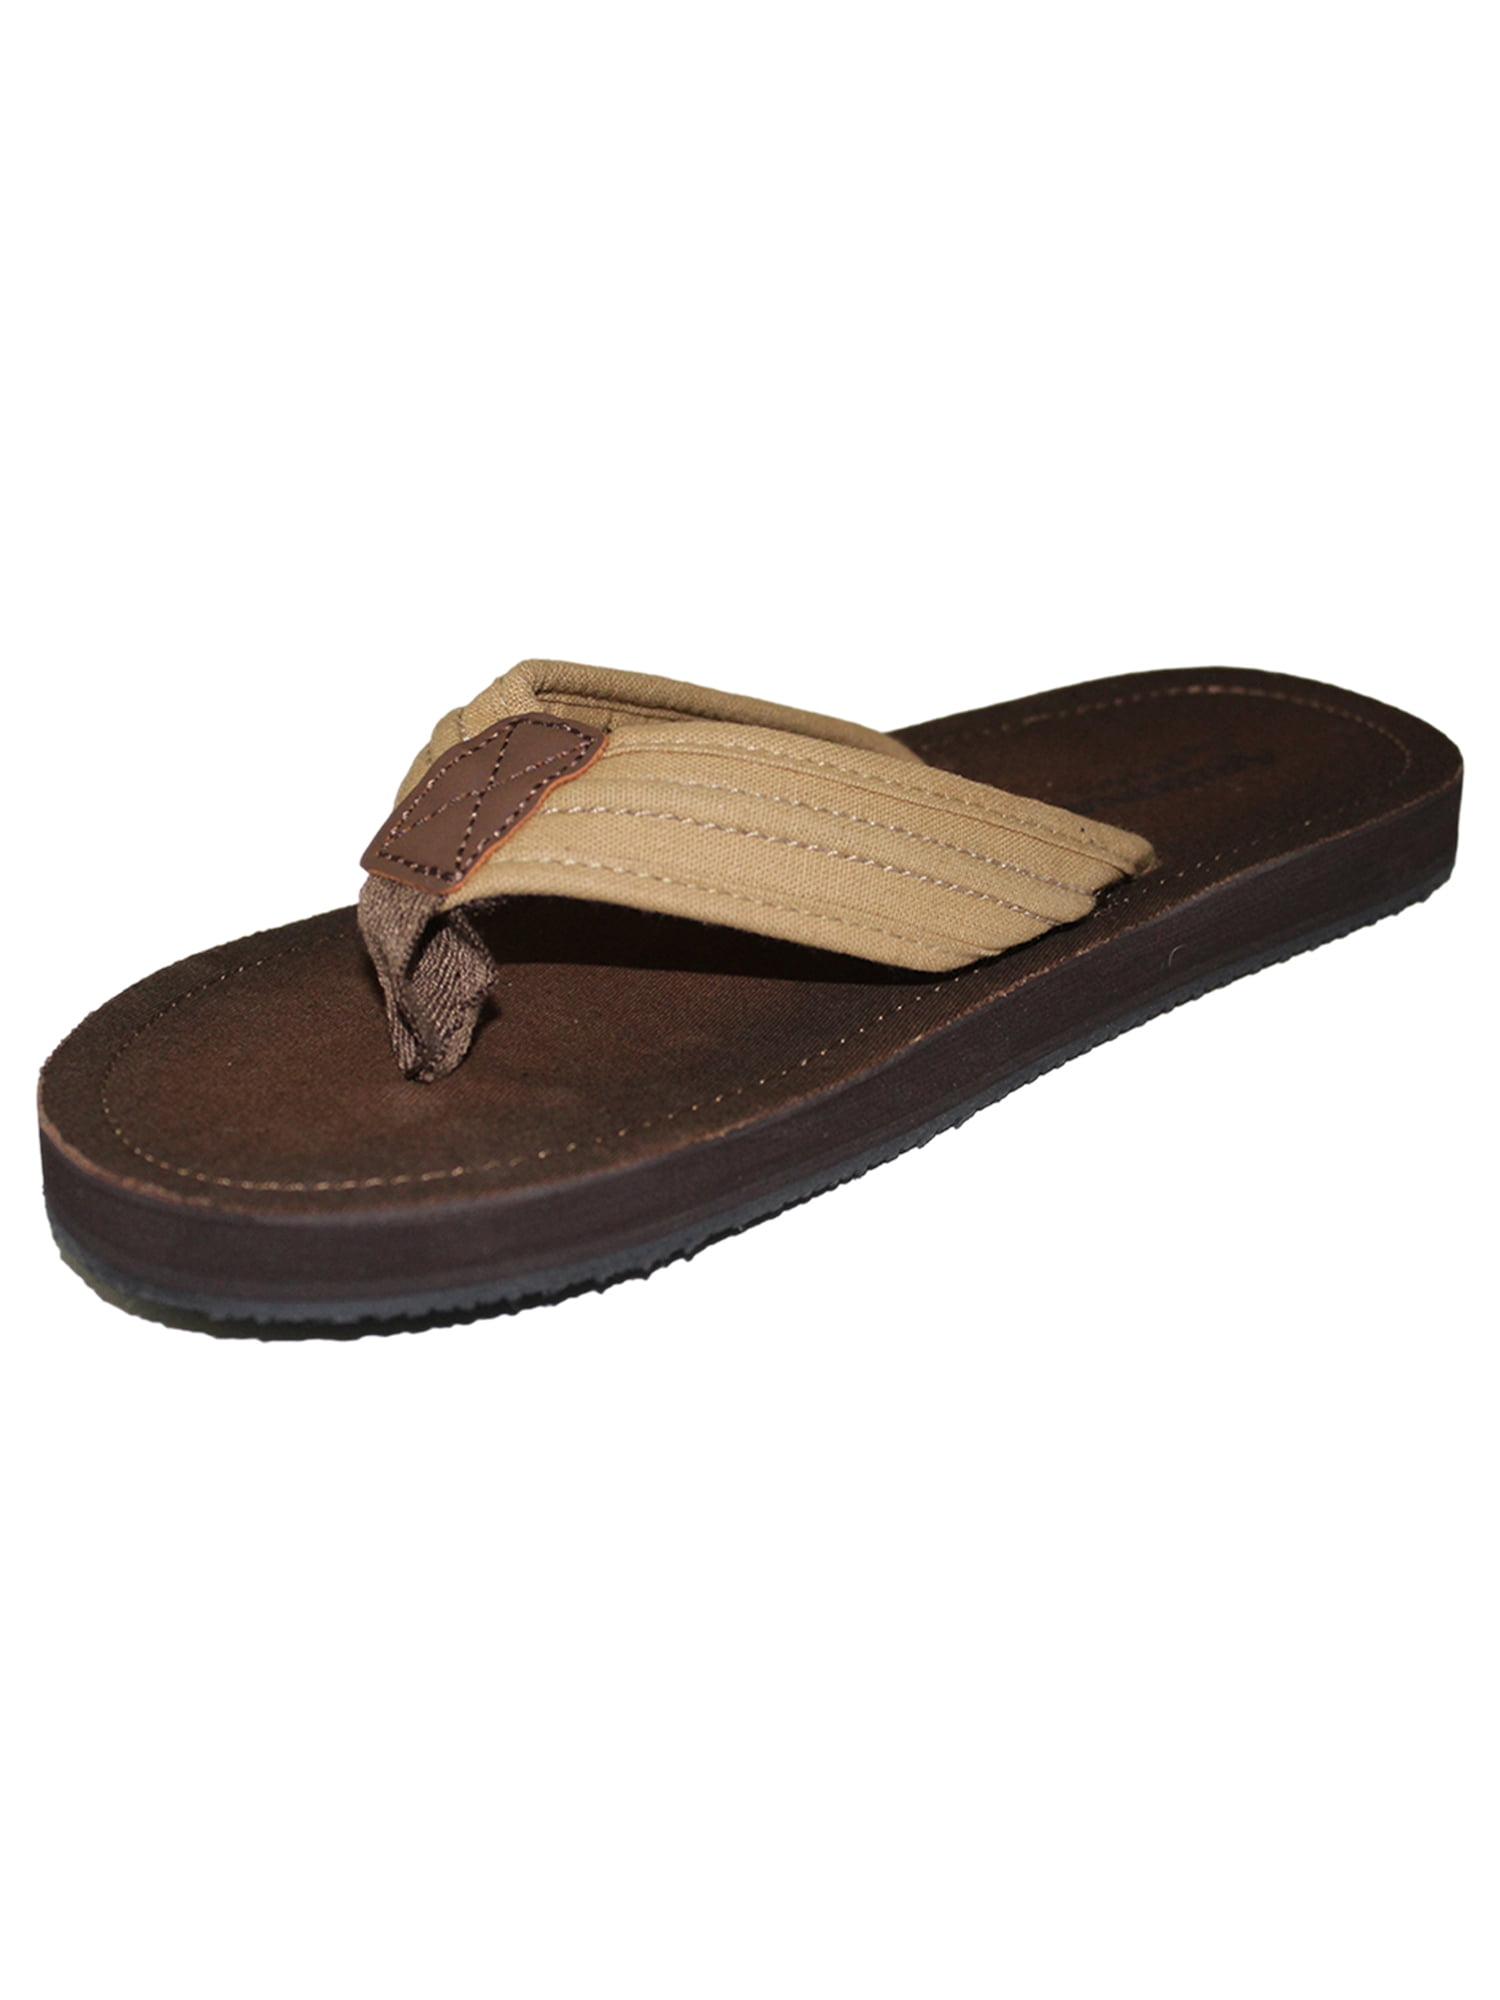 Men Cobian Floater FlipFlop Sandal FLT08-001 Black 100% Authentic Brand New